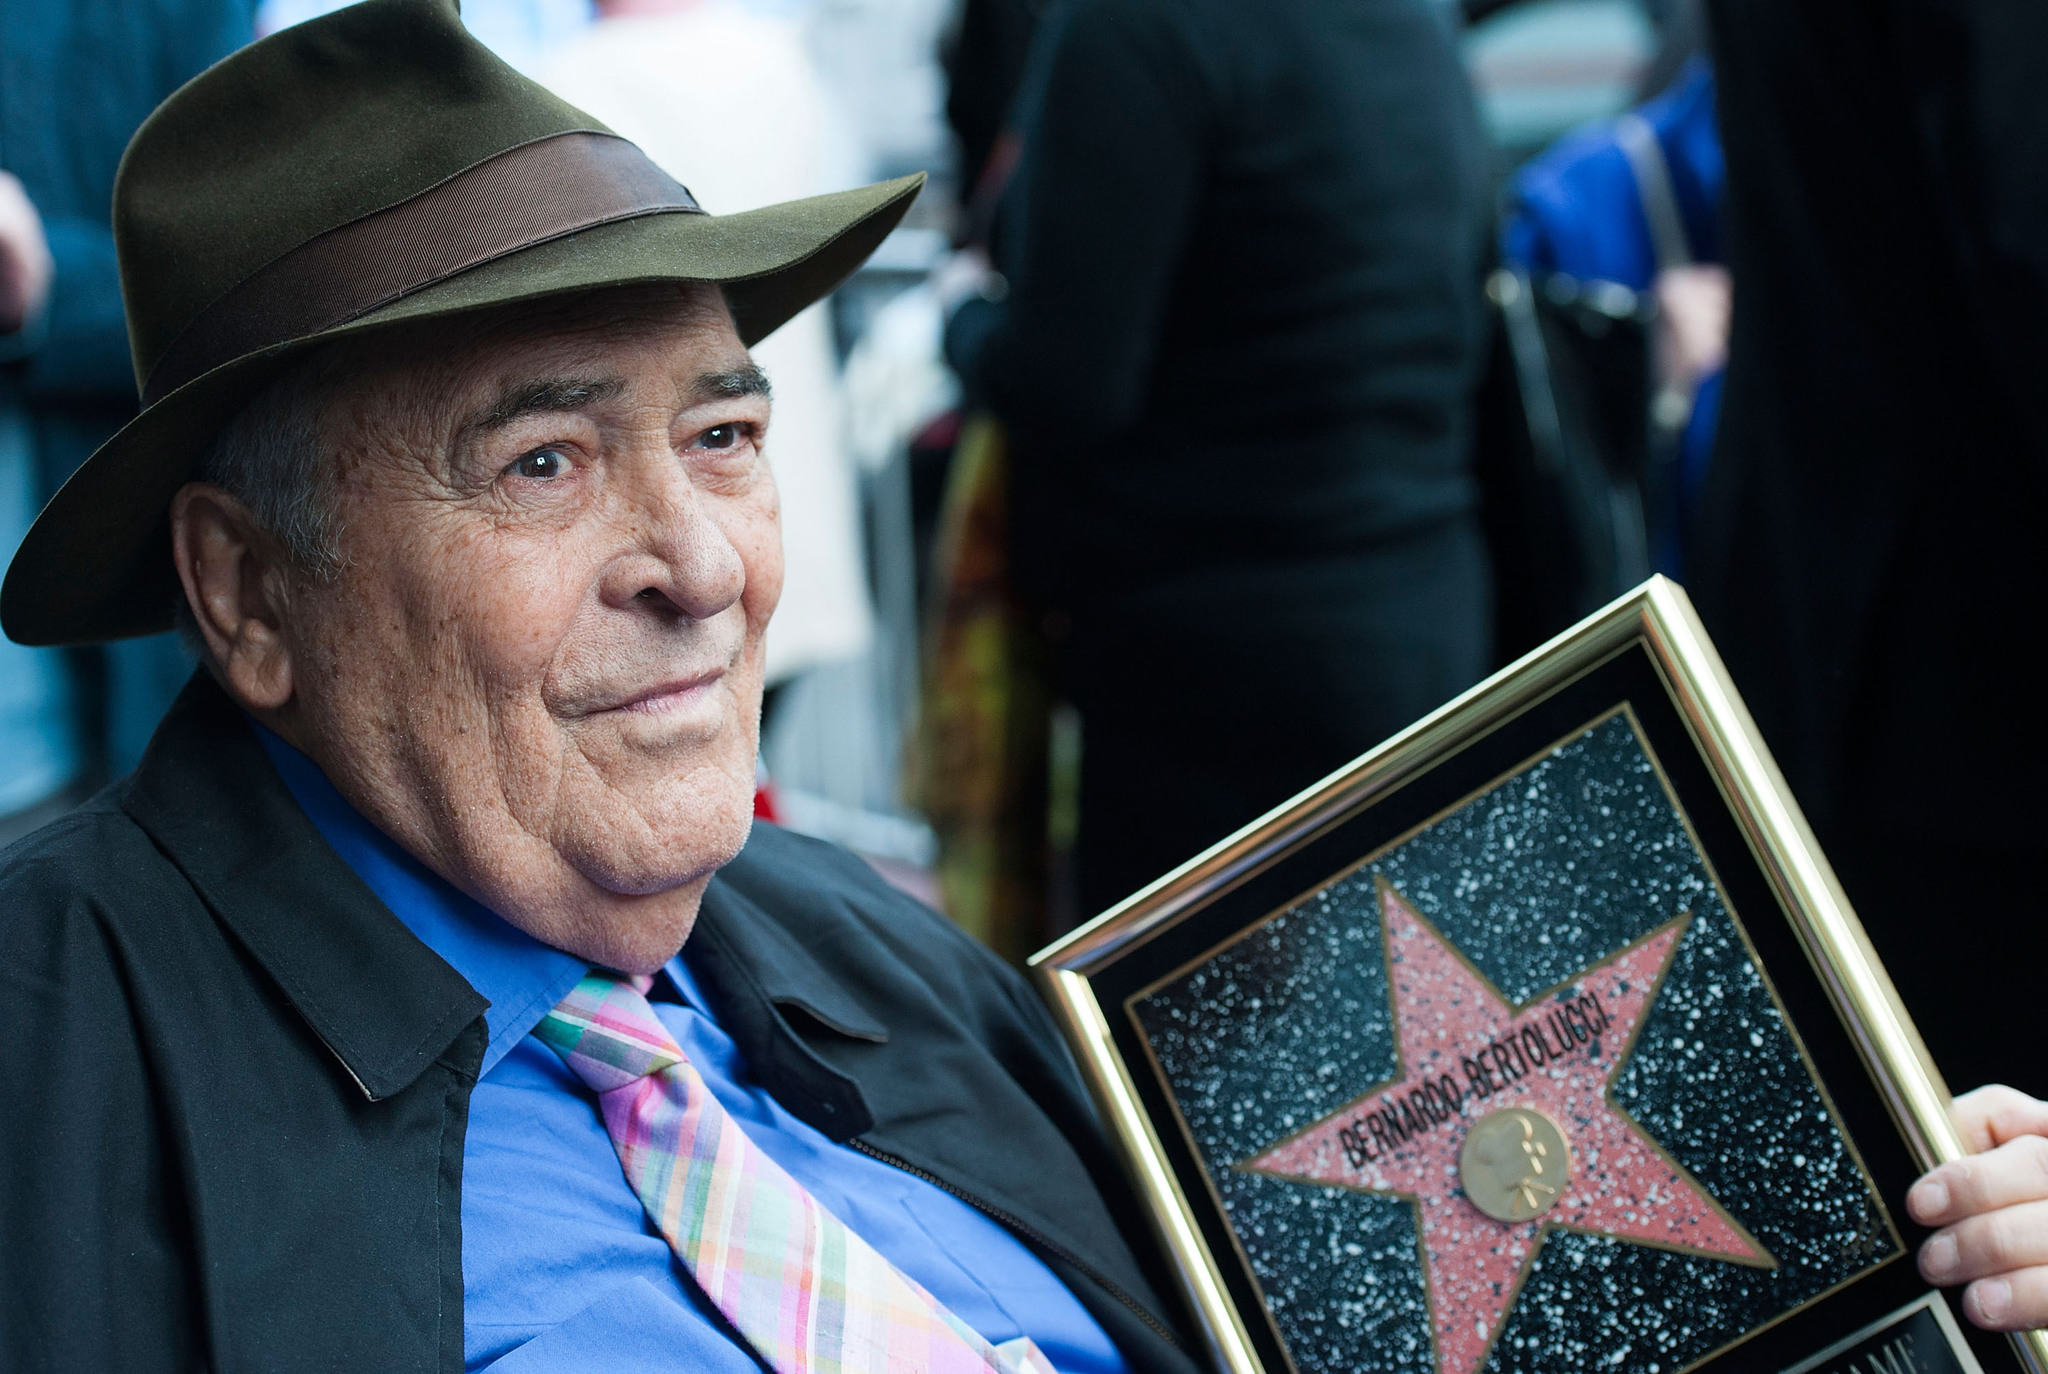 Director Bernardo Bertolucci celebrates his Star on the Hollywood Walk of Fame on November 19, 2013 in Hollywood, California.